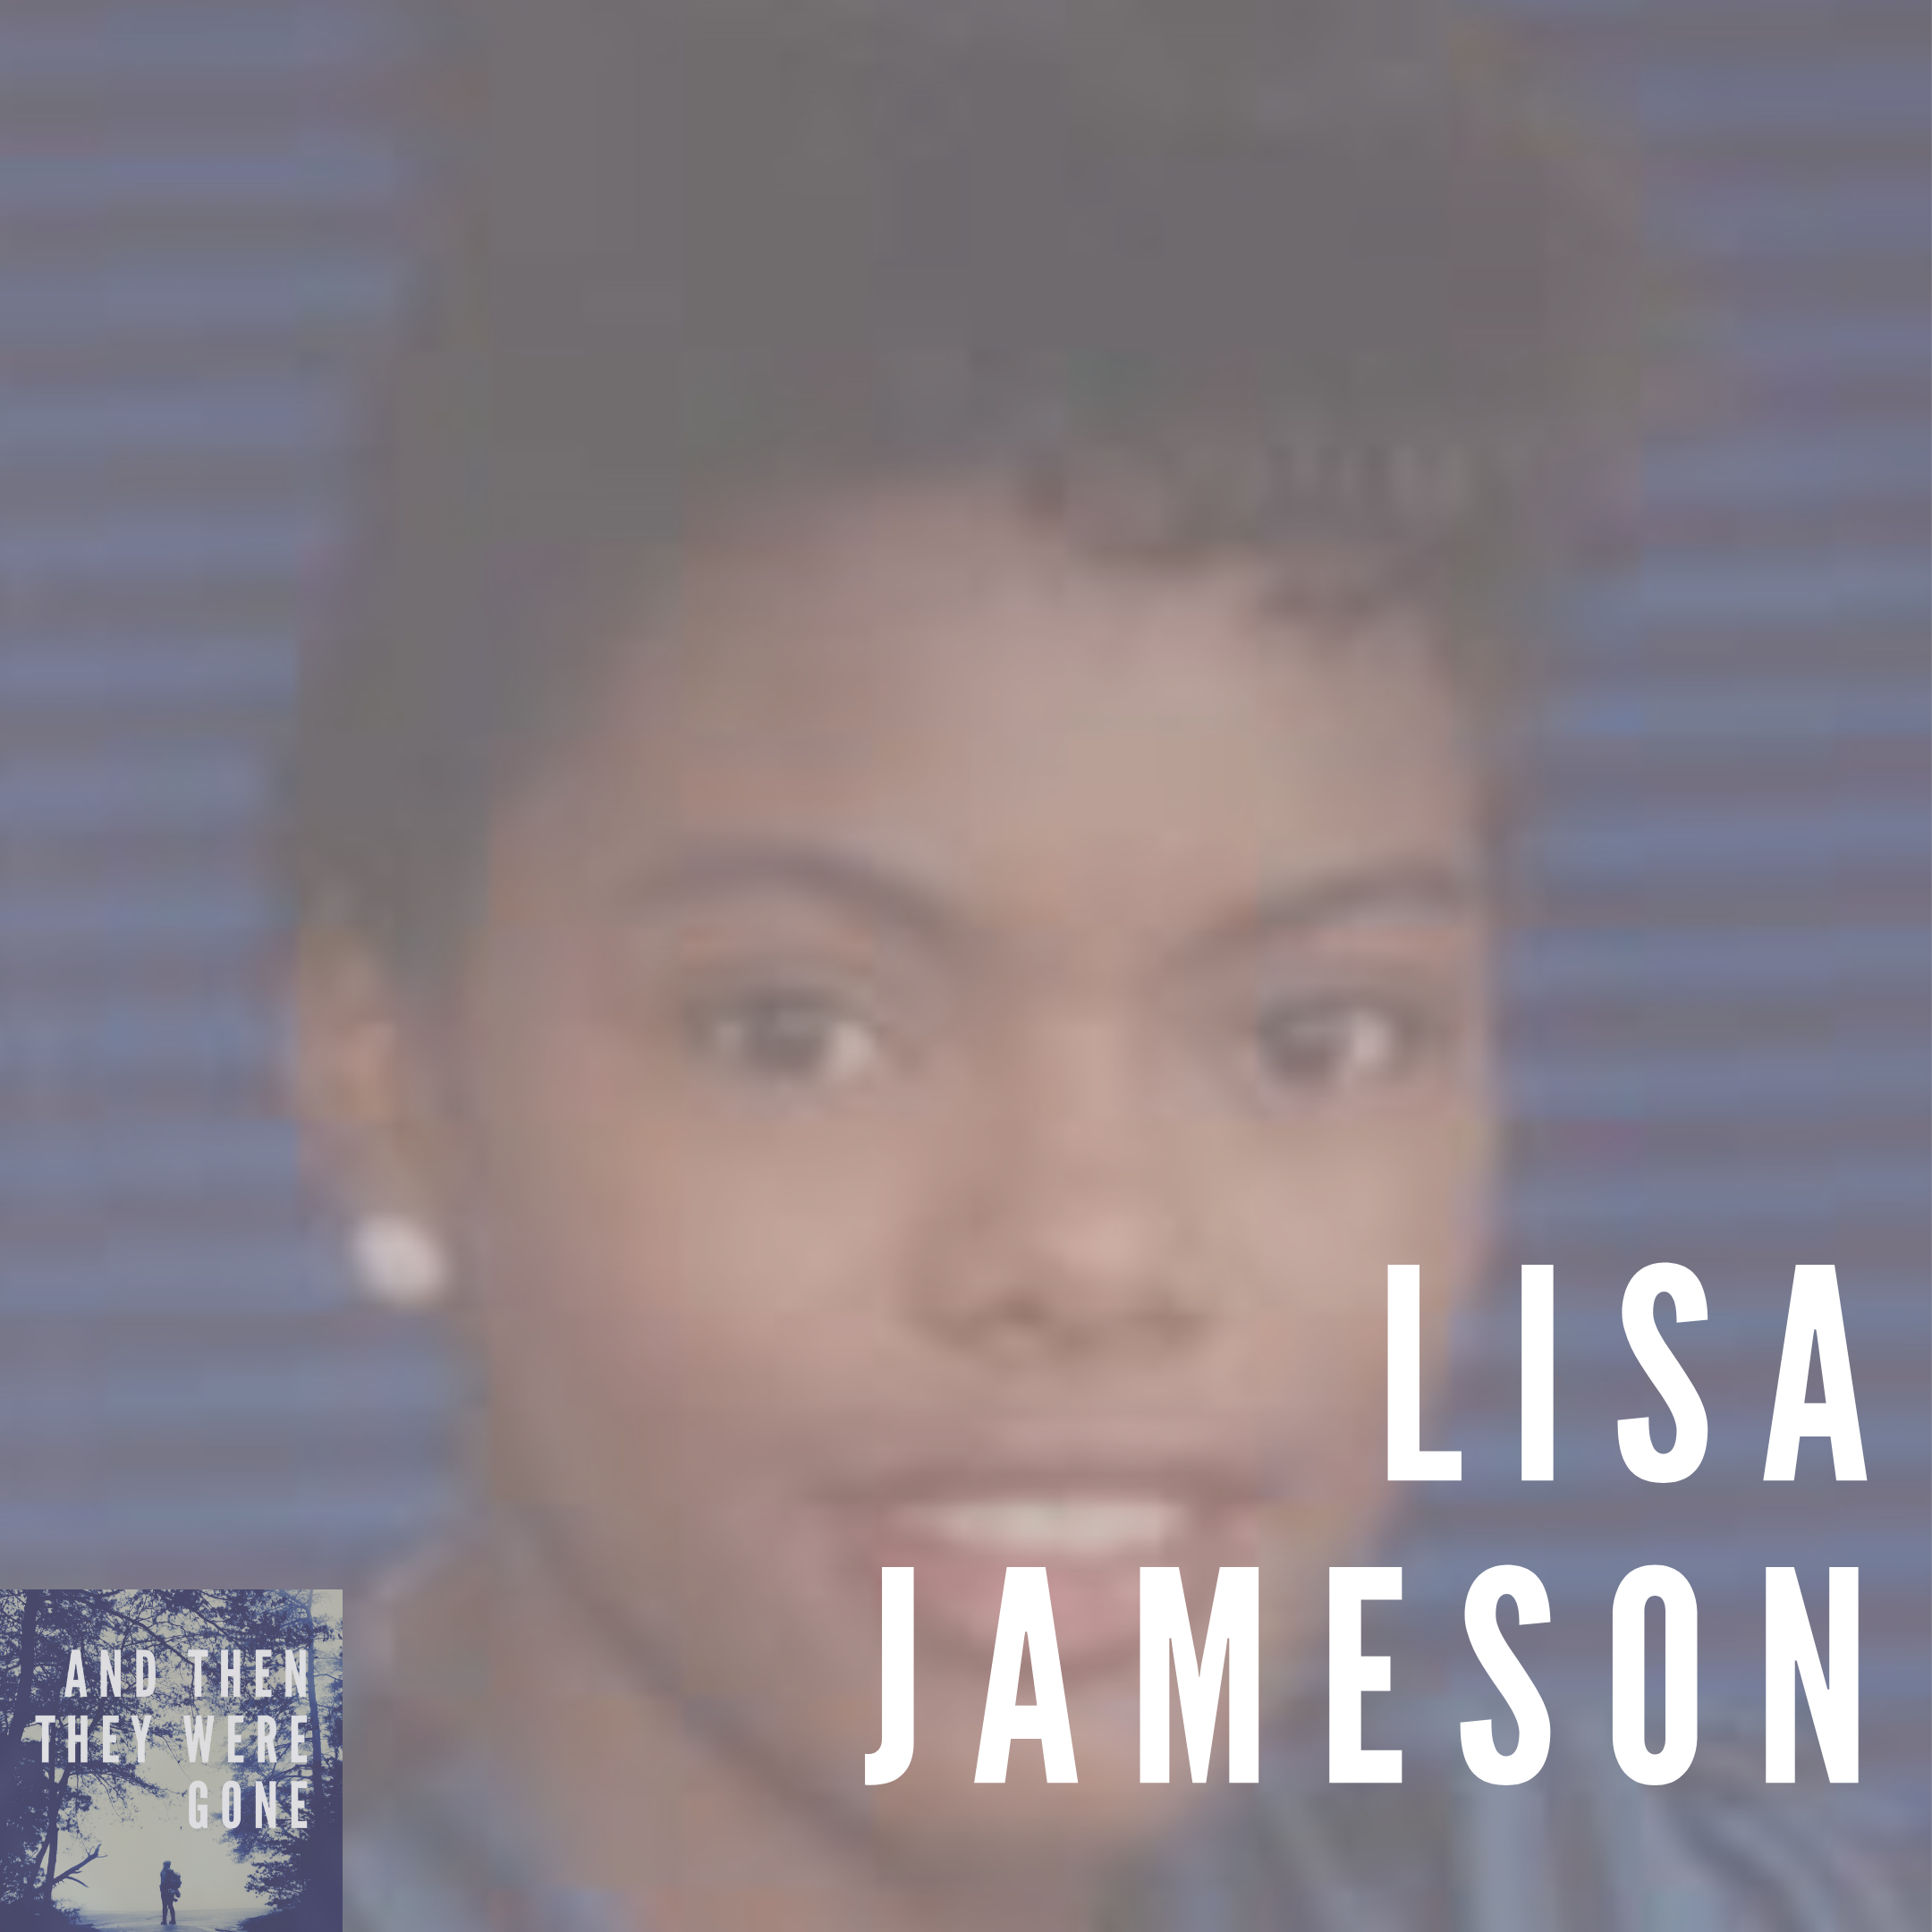 Lisa Jameson has been missing since November 4, 1991